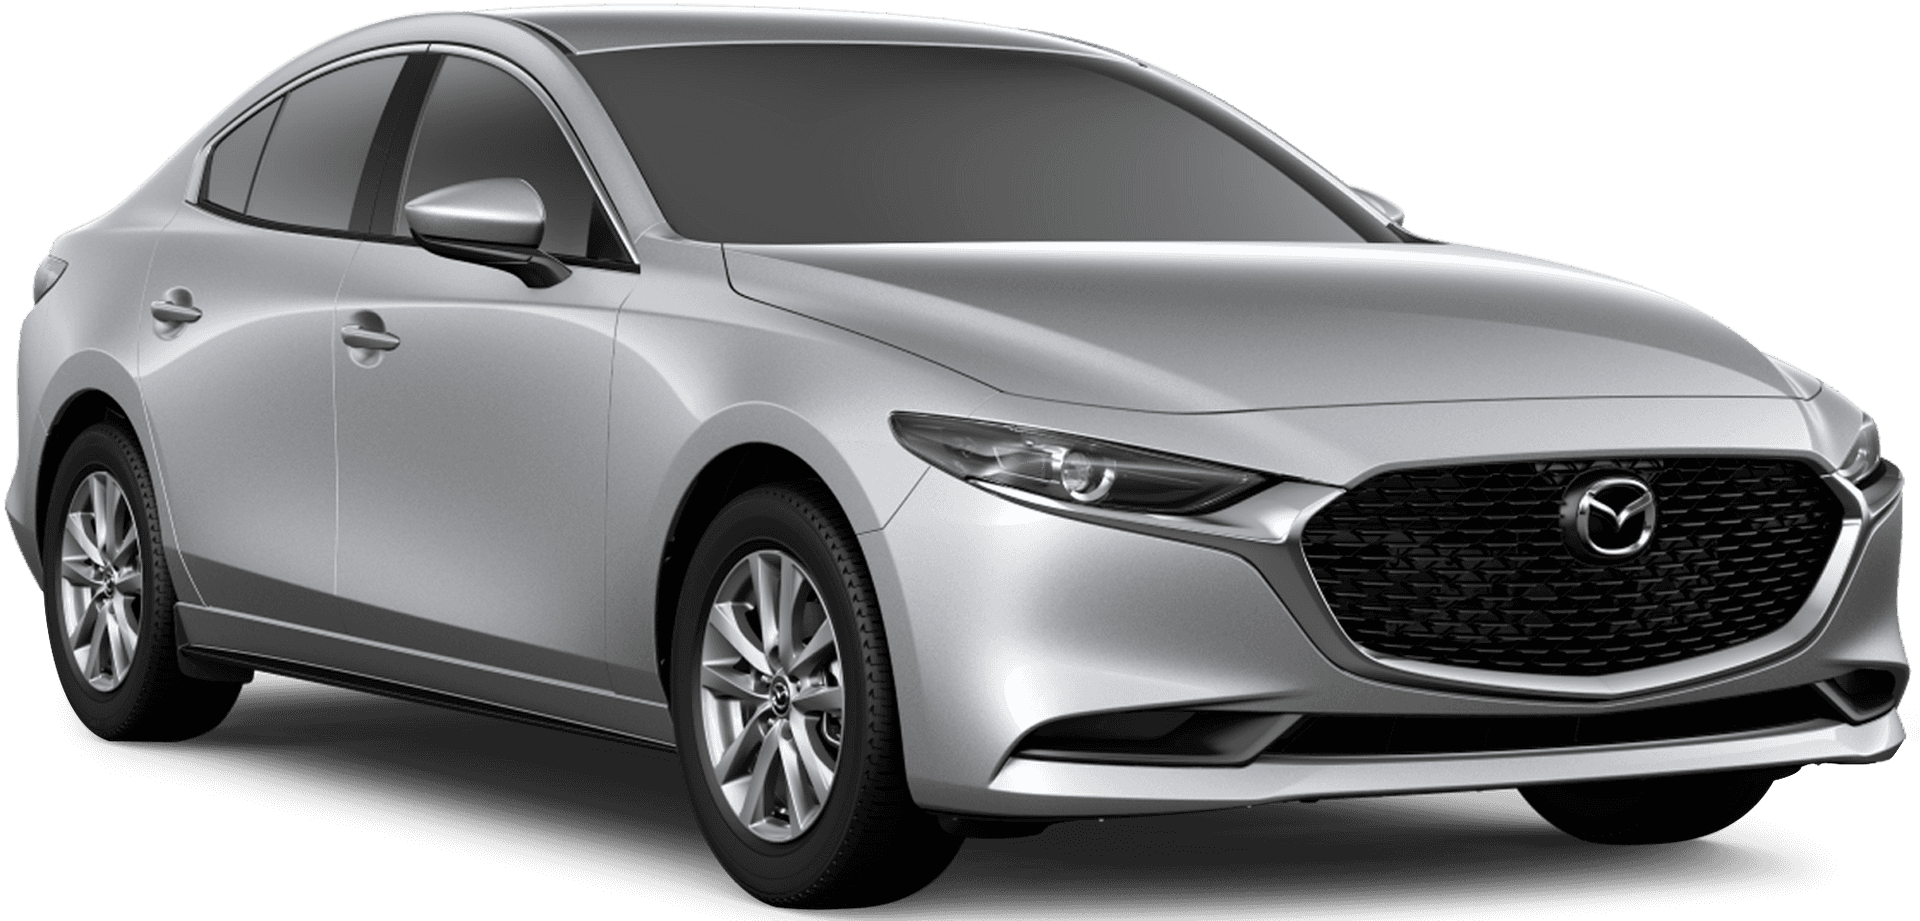 Silver Mazda Sedan Profile View PNG